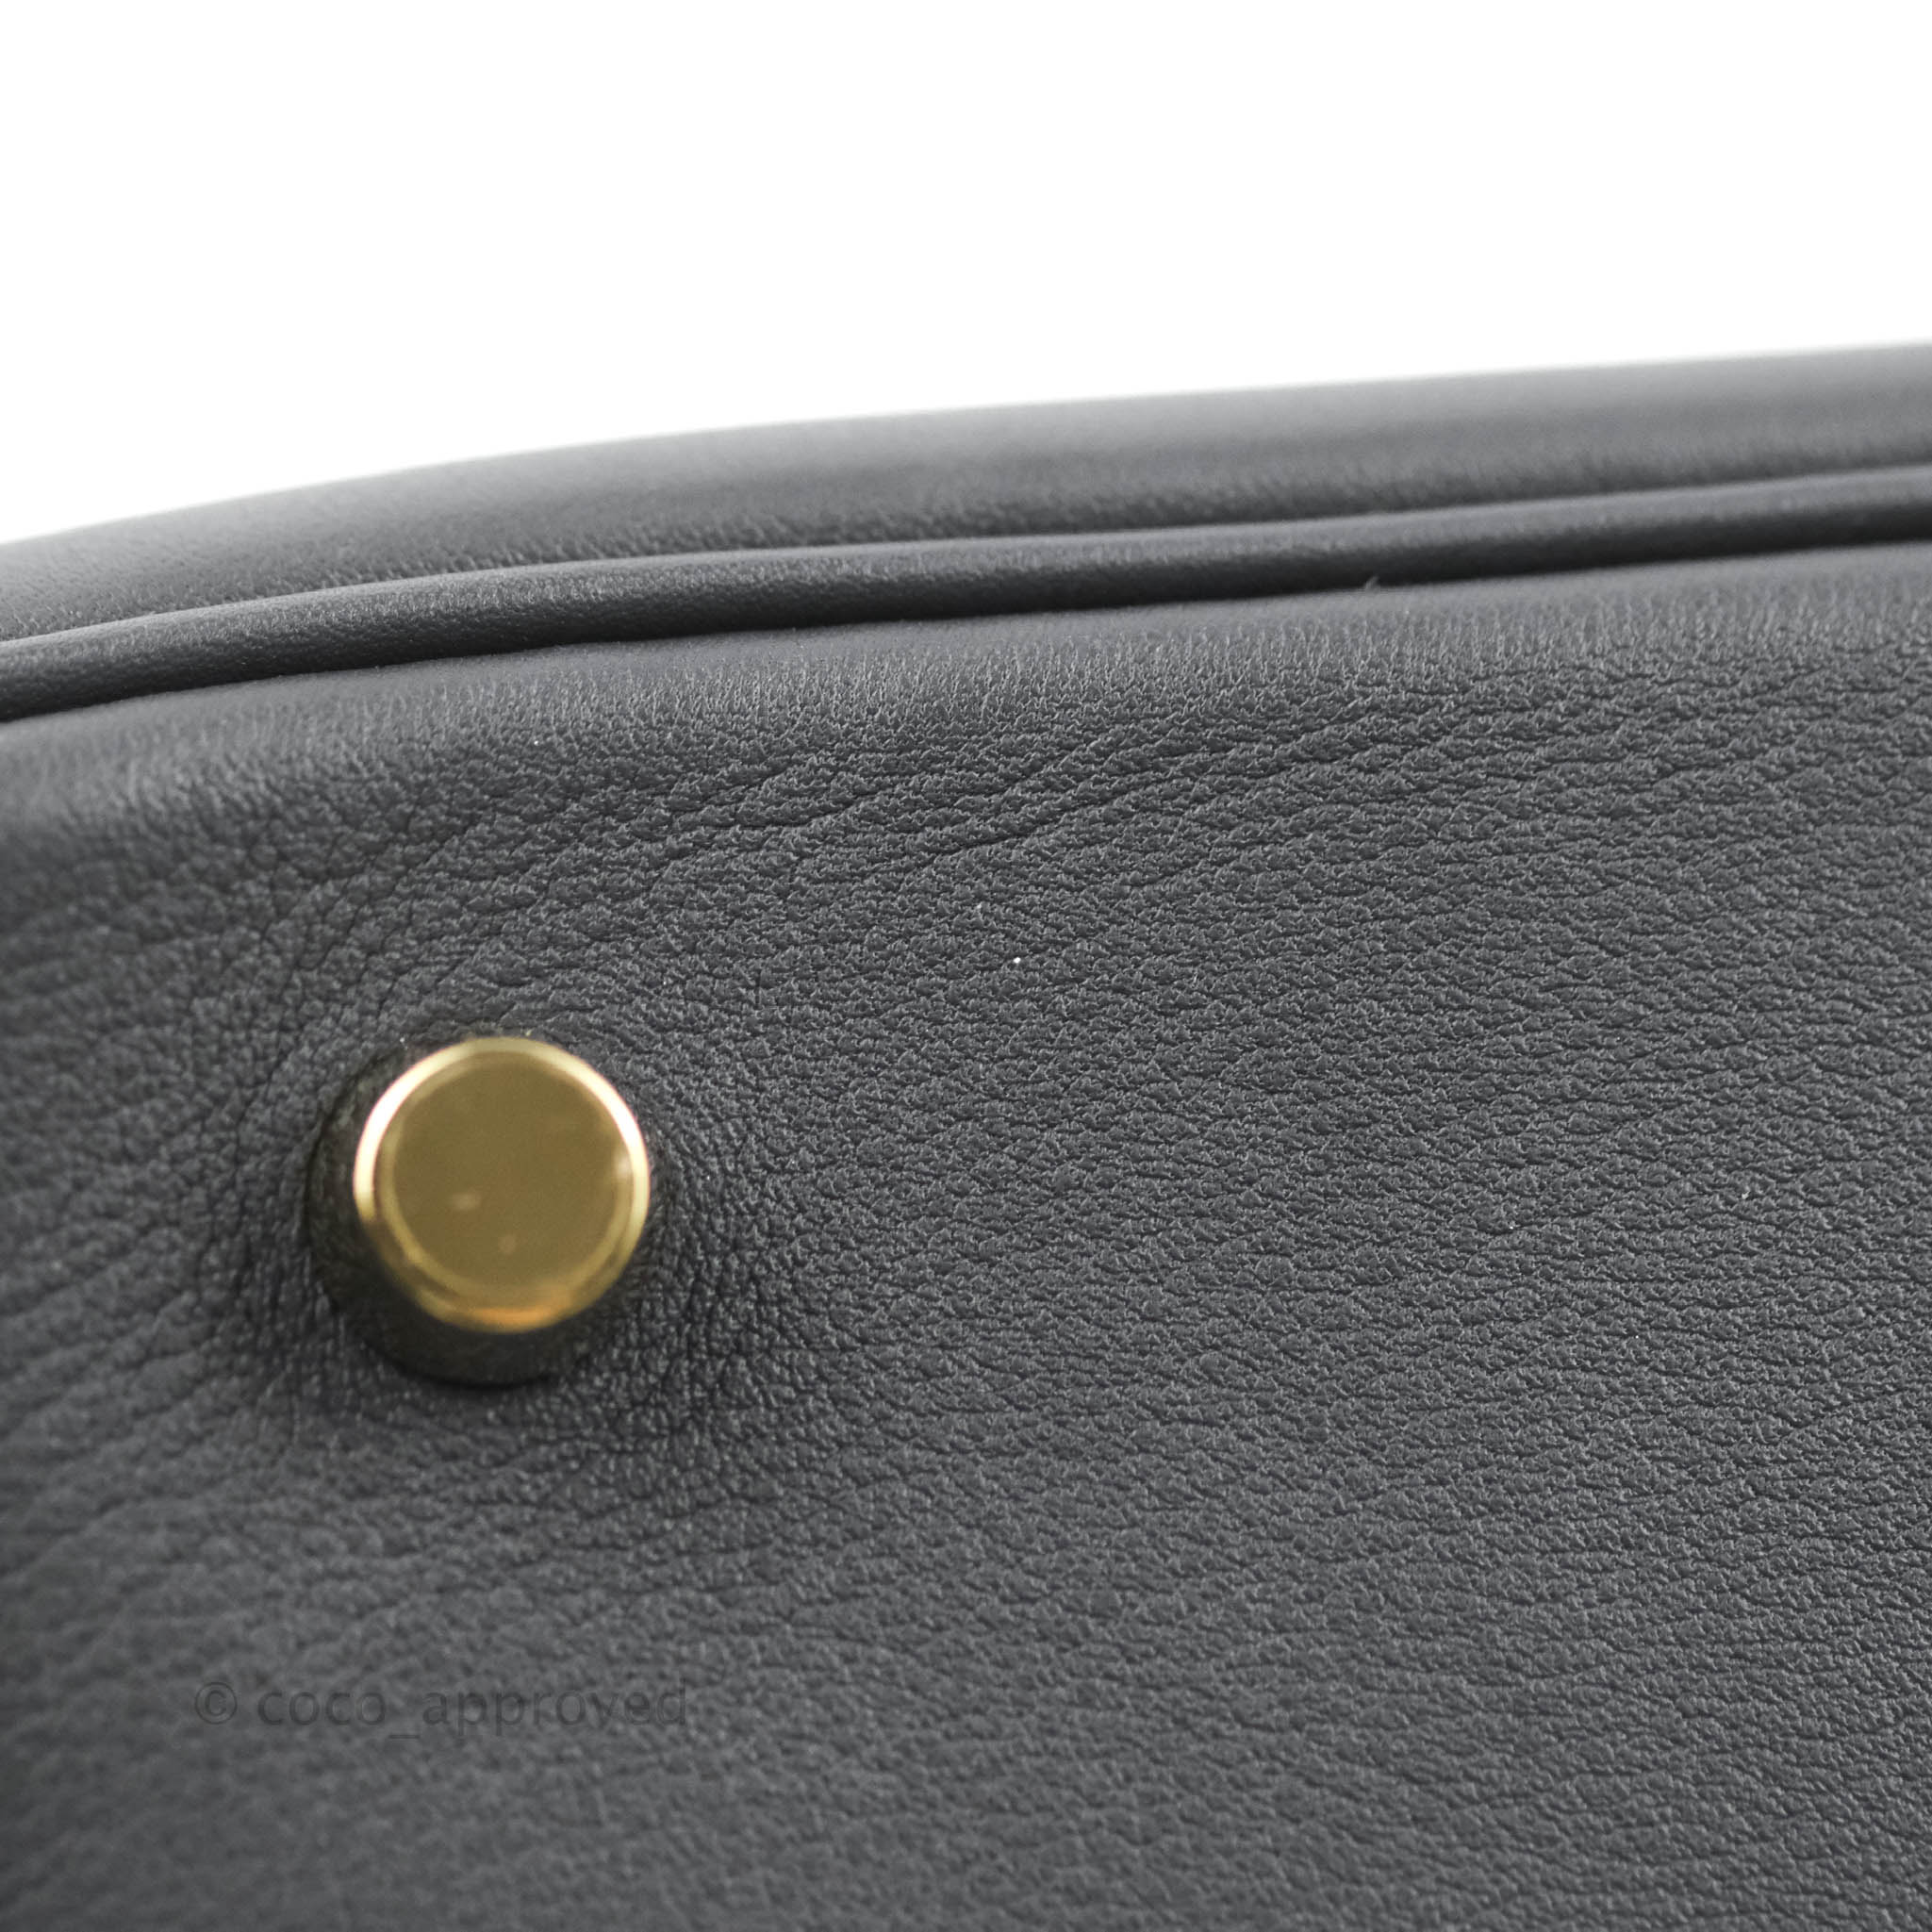 Hermès Lindy 26 Evercolor Beige De Weimar Gold Hardware – Coco Approved  Studio